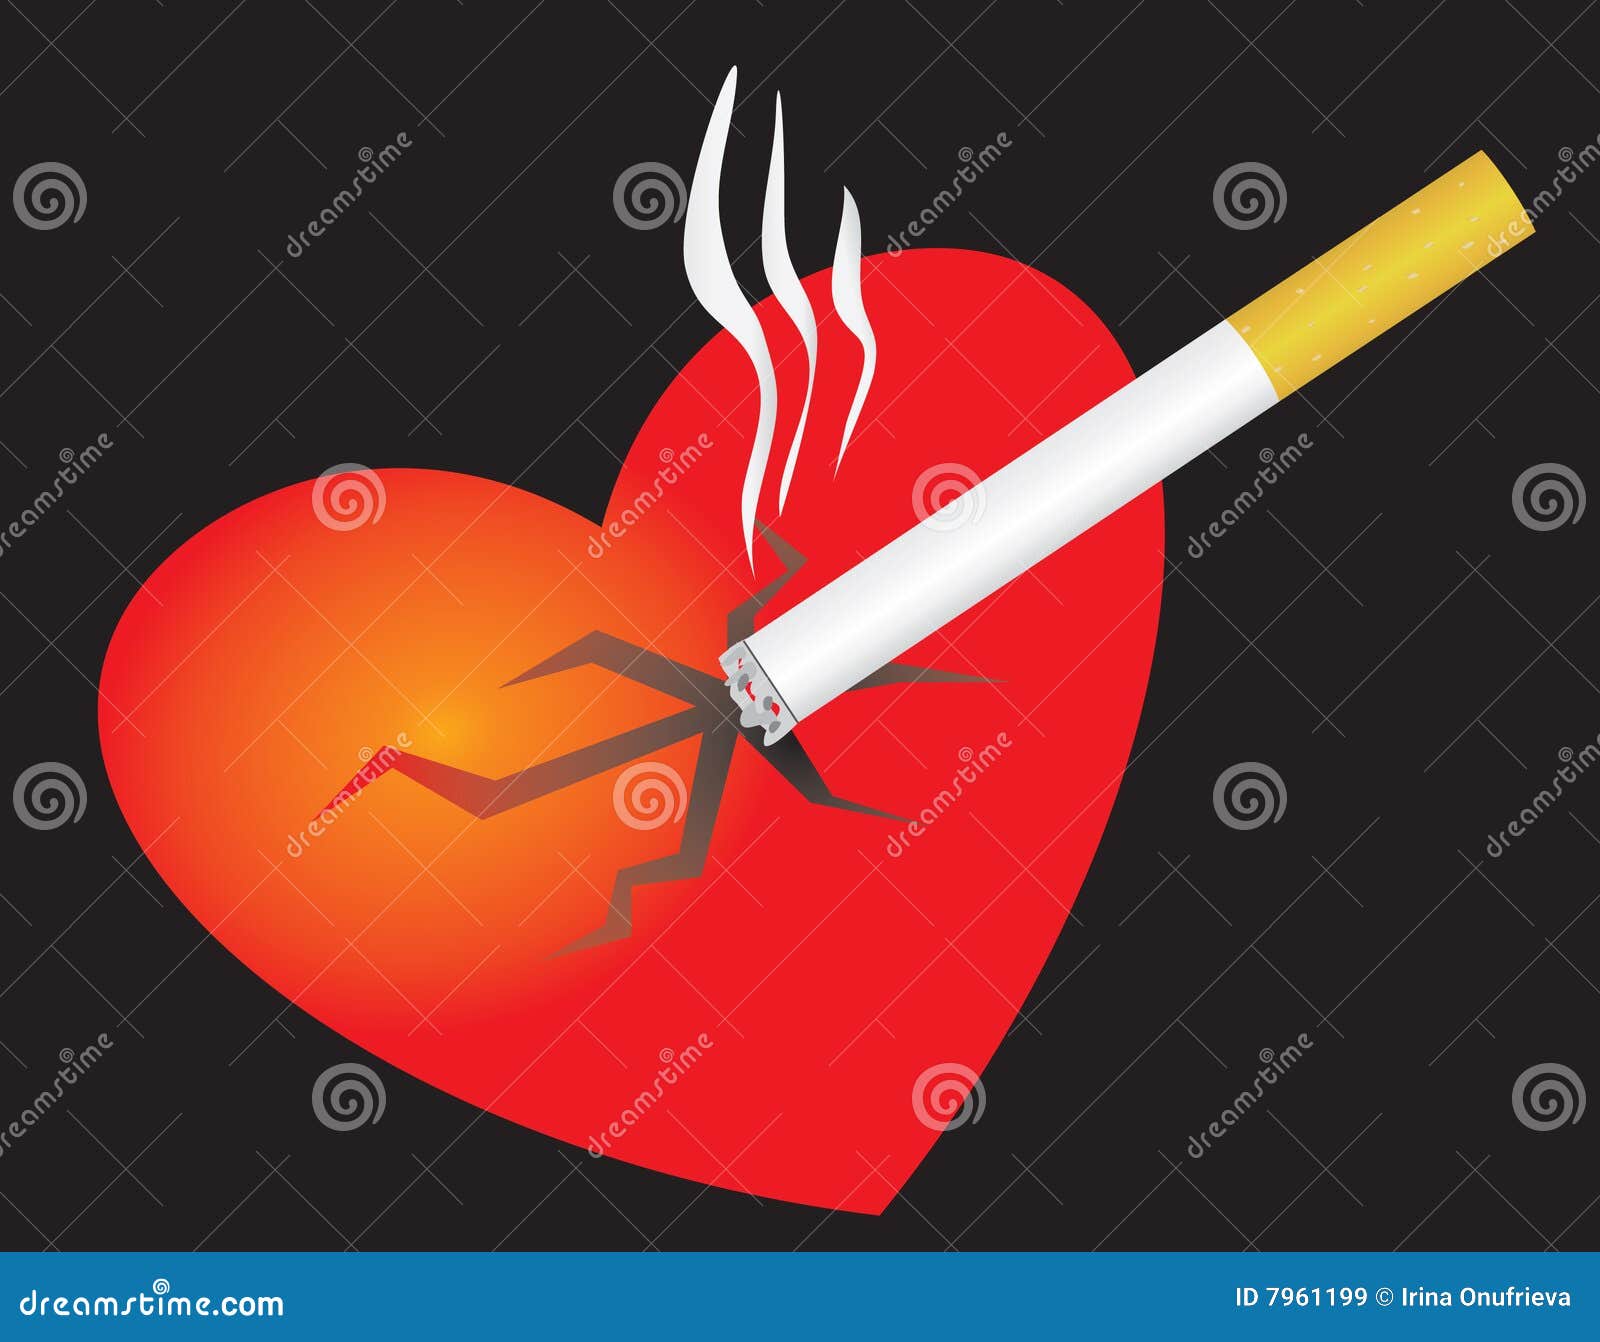 Smoking Cigarettes Break Your Heart Stock Vector - Illustration of healthy,  break: 7961199